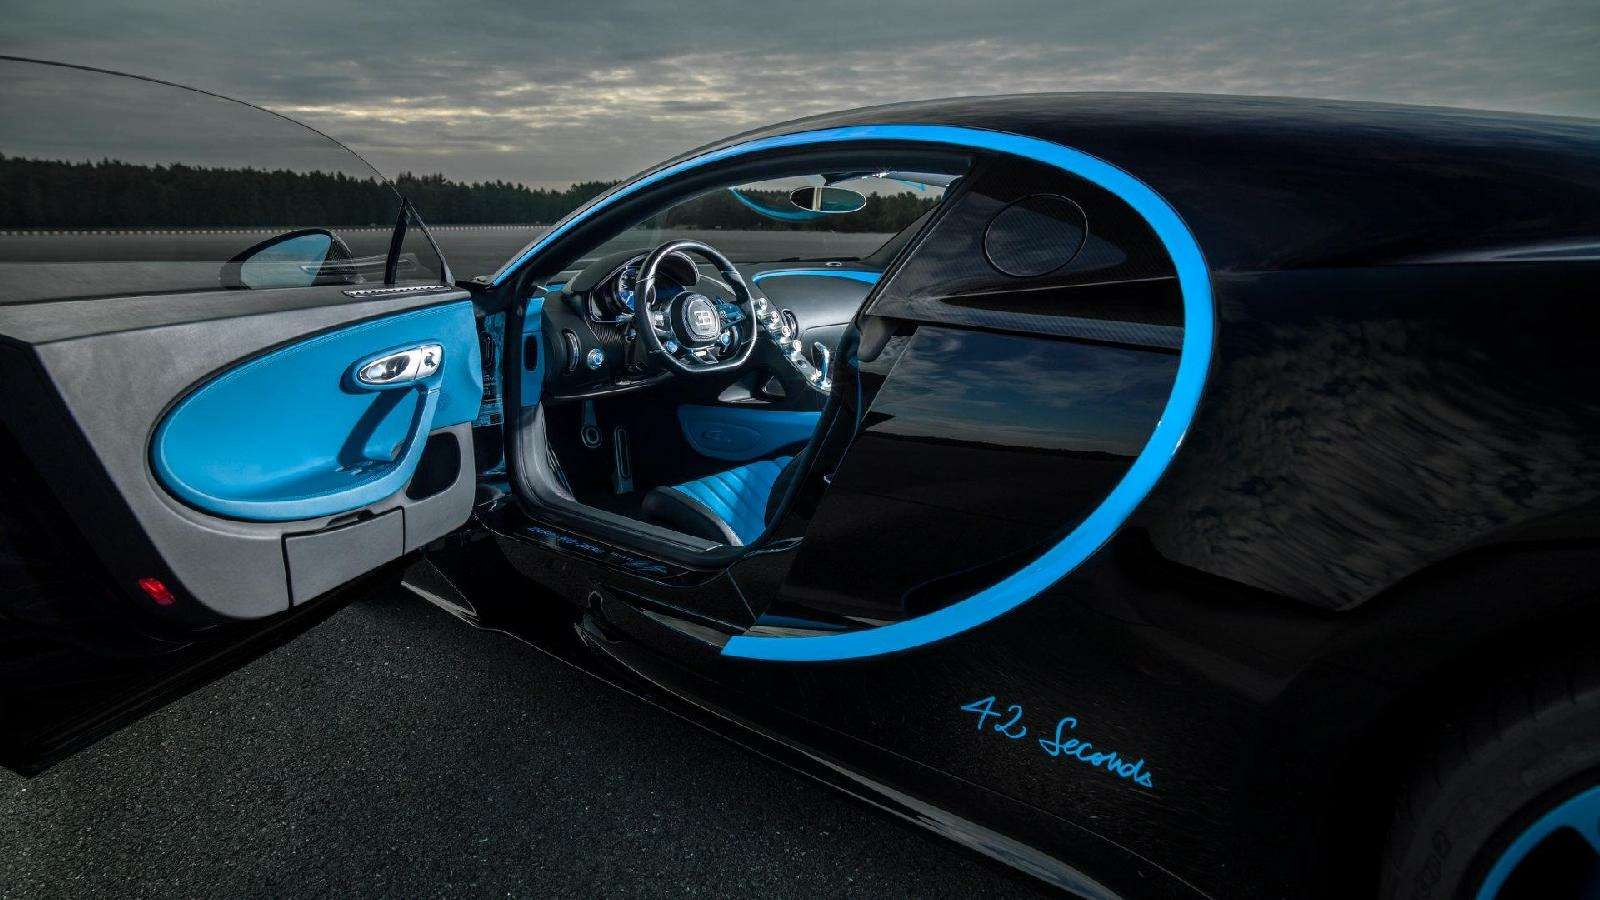 0-400-0 км/ч — видео рекордного заезда Bugatti Chiron — фото 794901